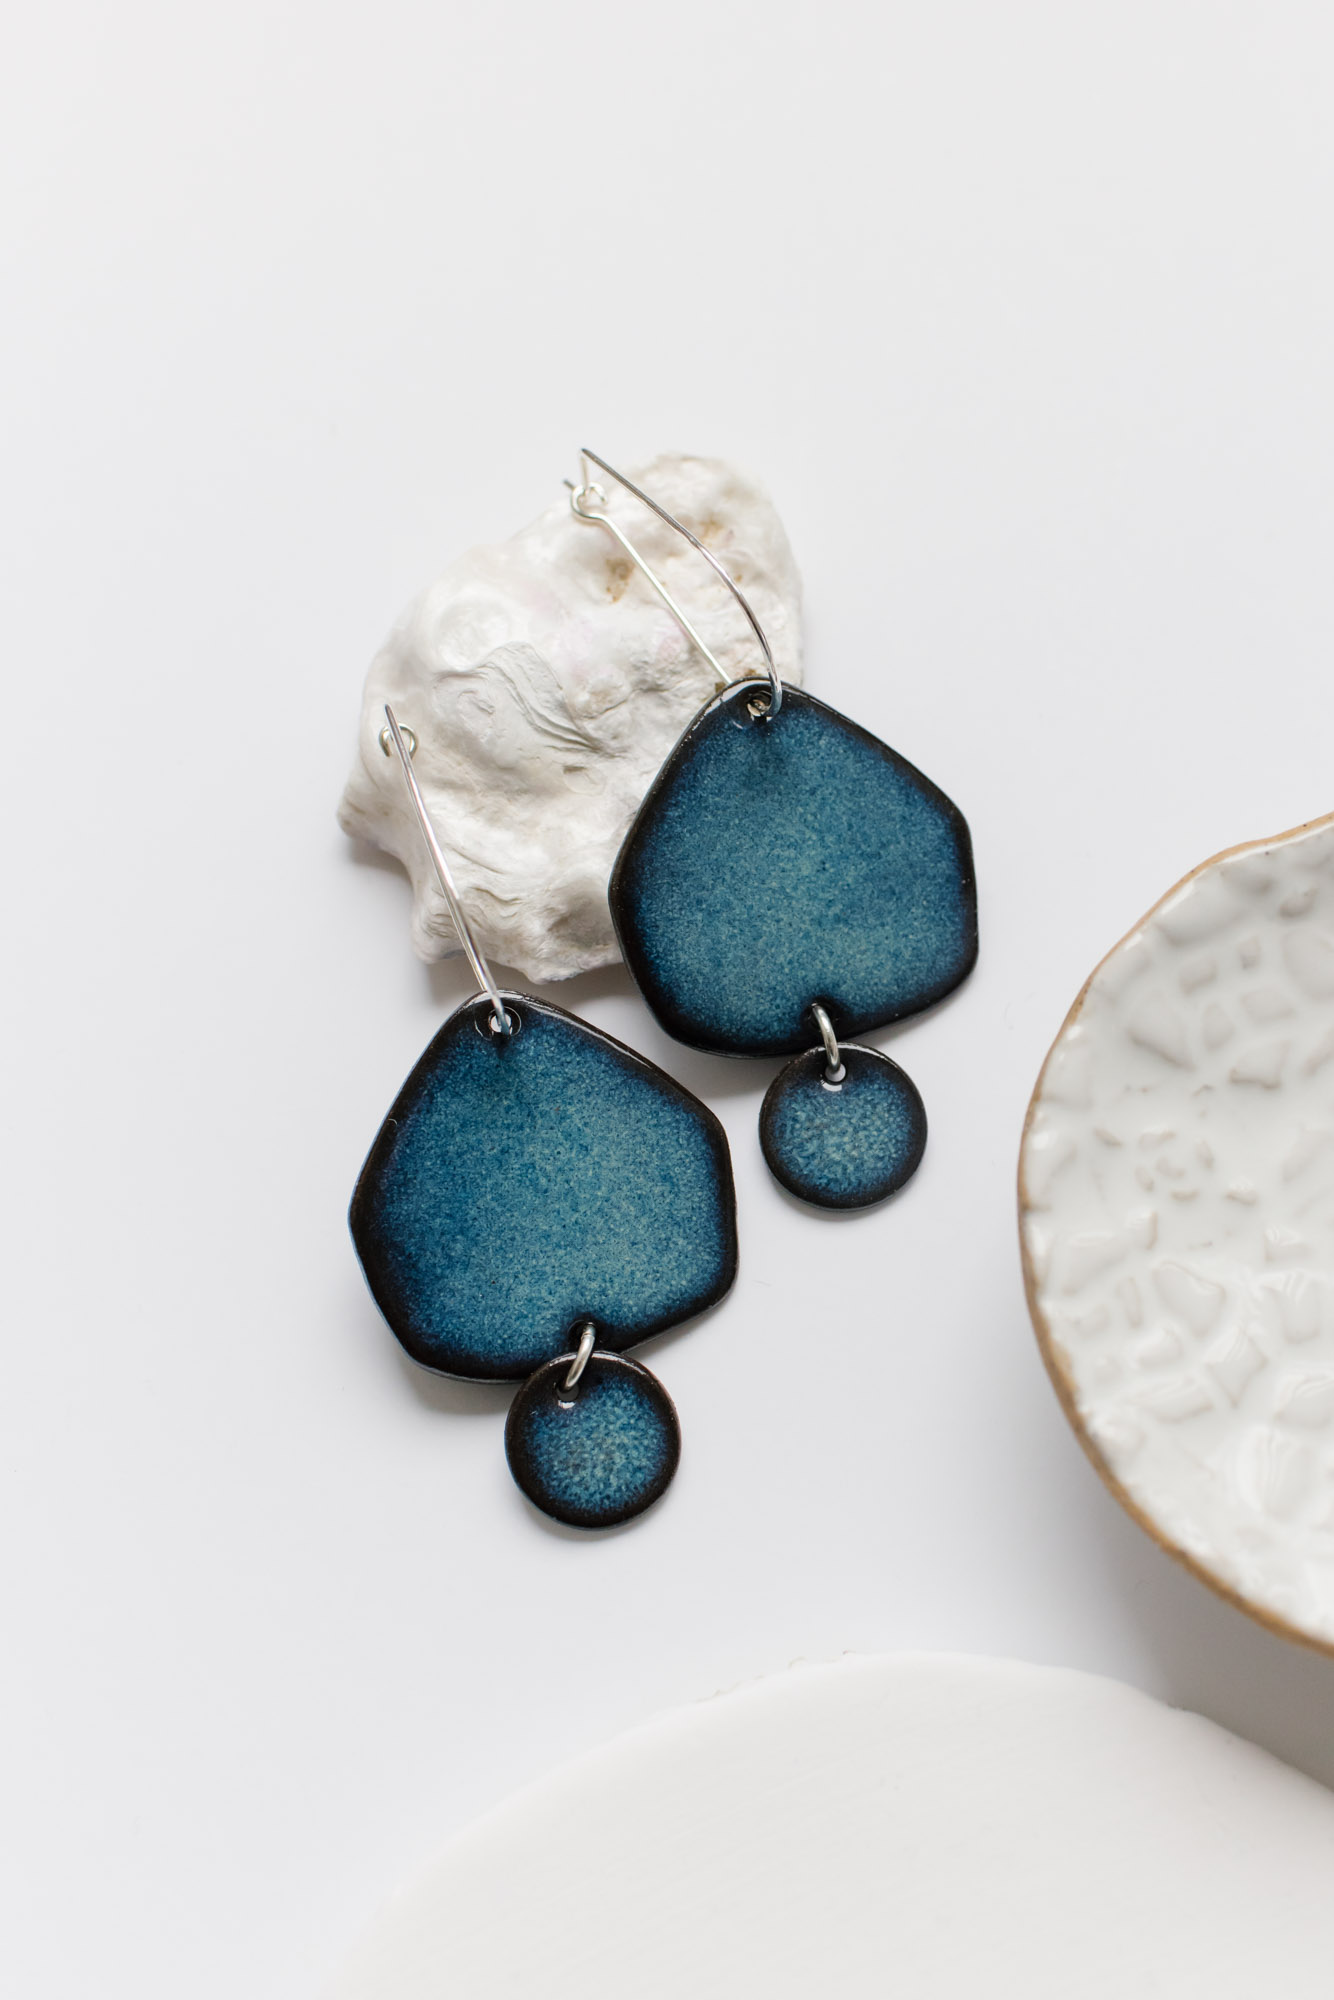 Ocean blue glazed ceramic earrings with stainless steel clasps made by Meraki Fire Ceramics Sydney